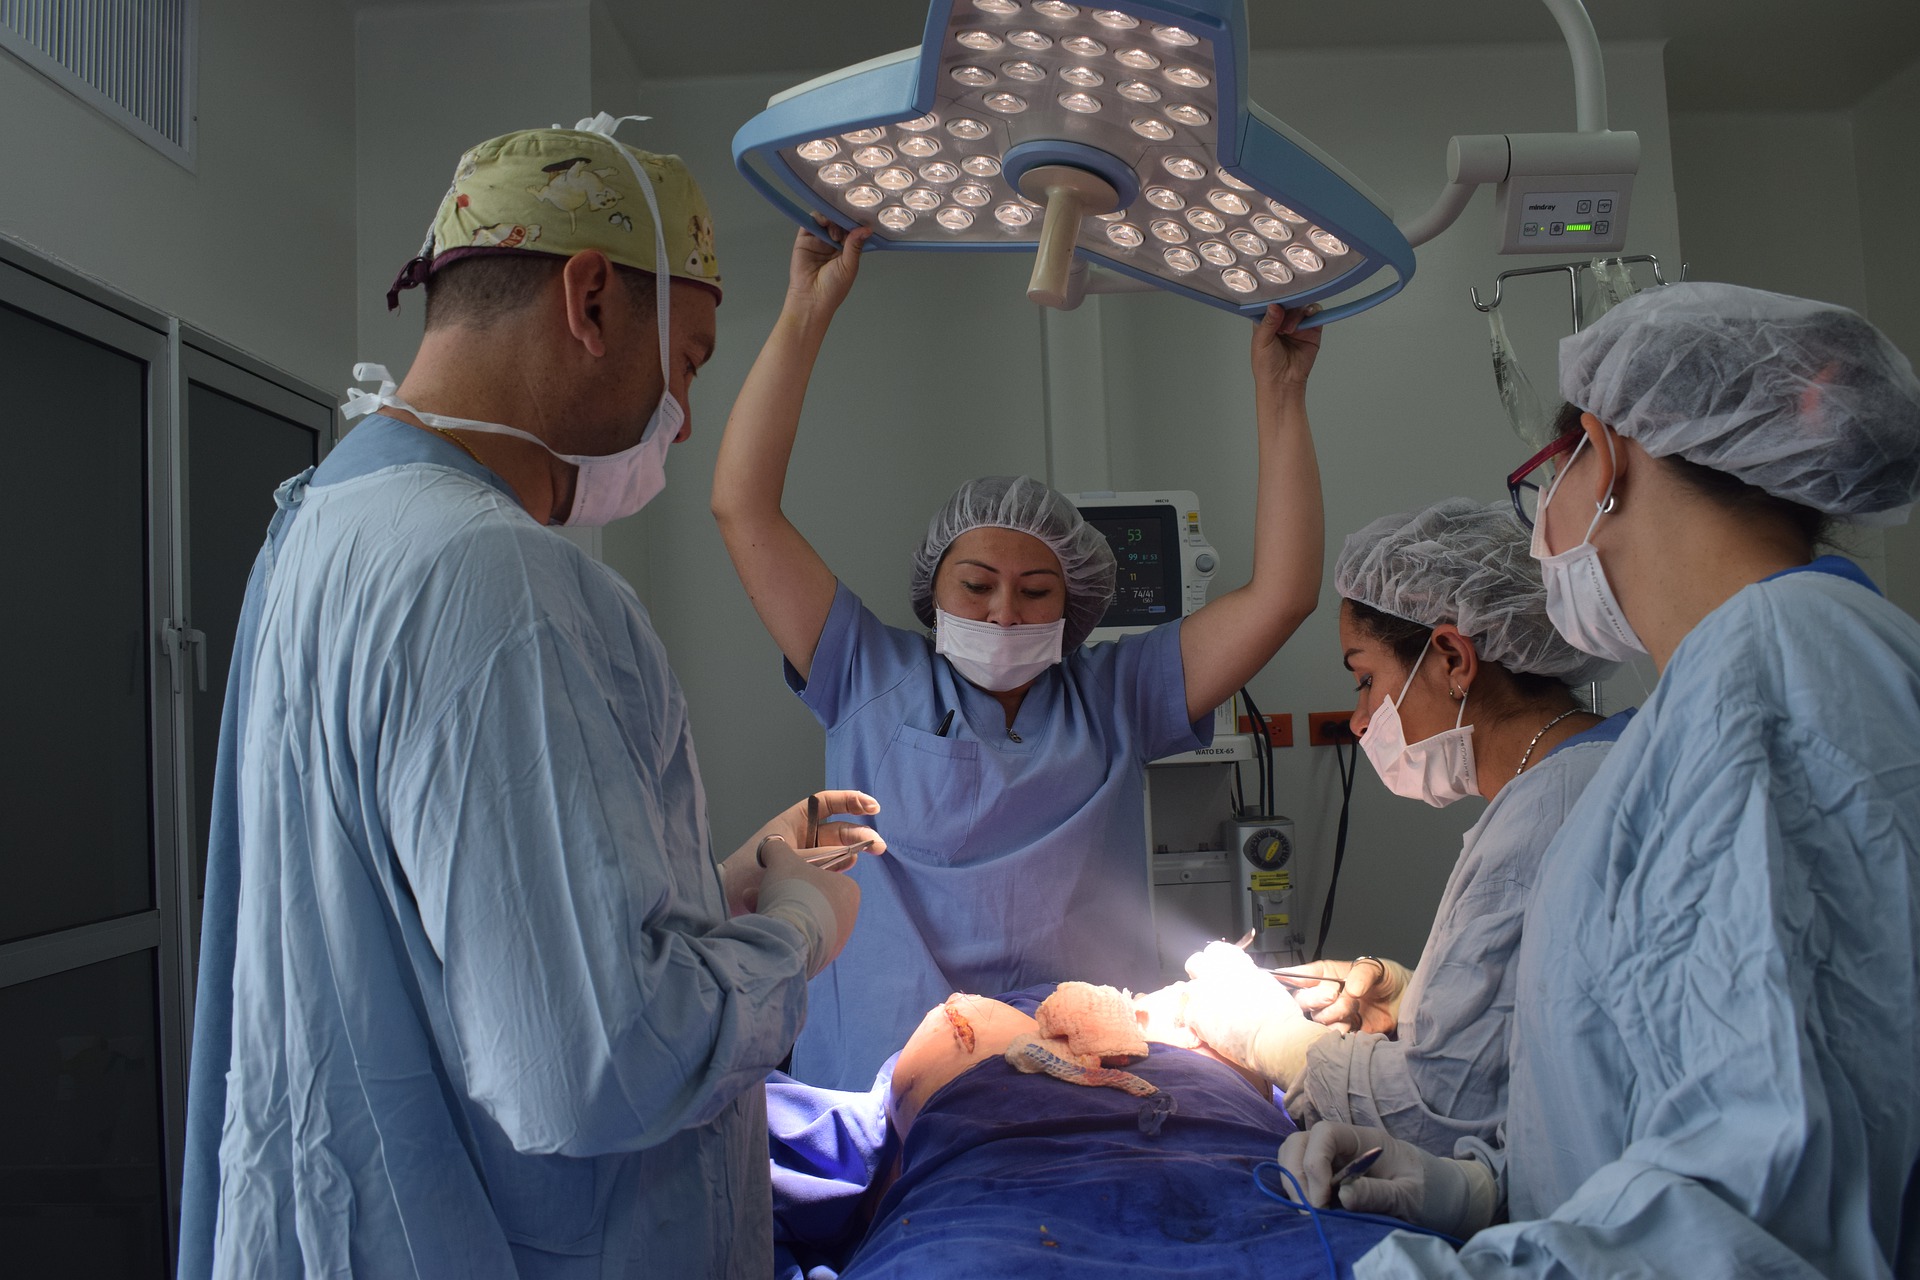 Cirurgia Plástica: quanto custa cada procedimento?